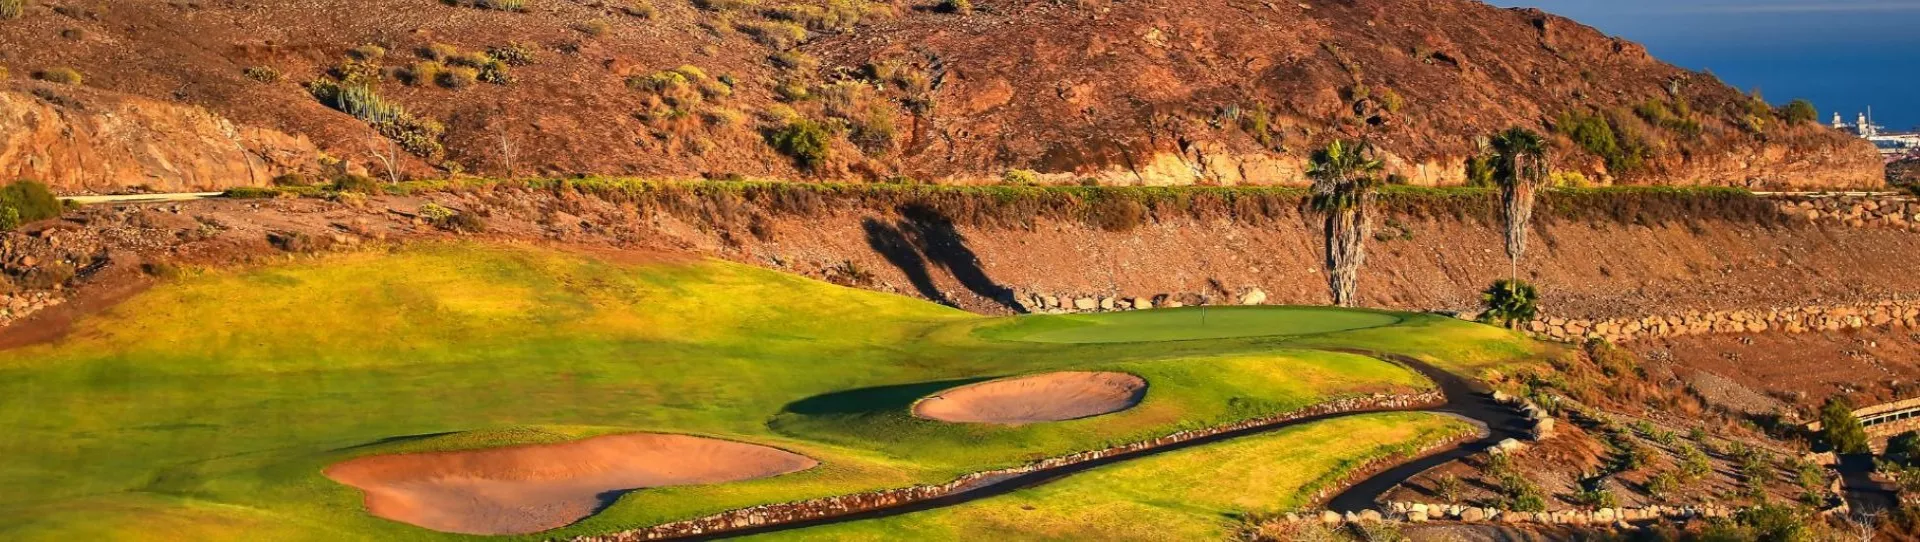 Spain golf courses - Salobre Golf Old Course - Photo 1